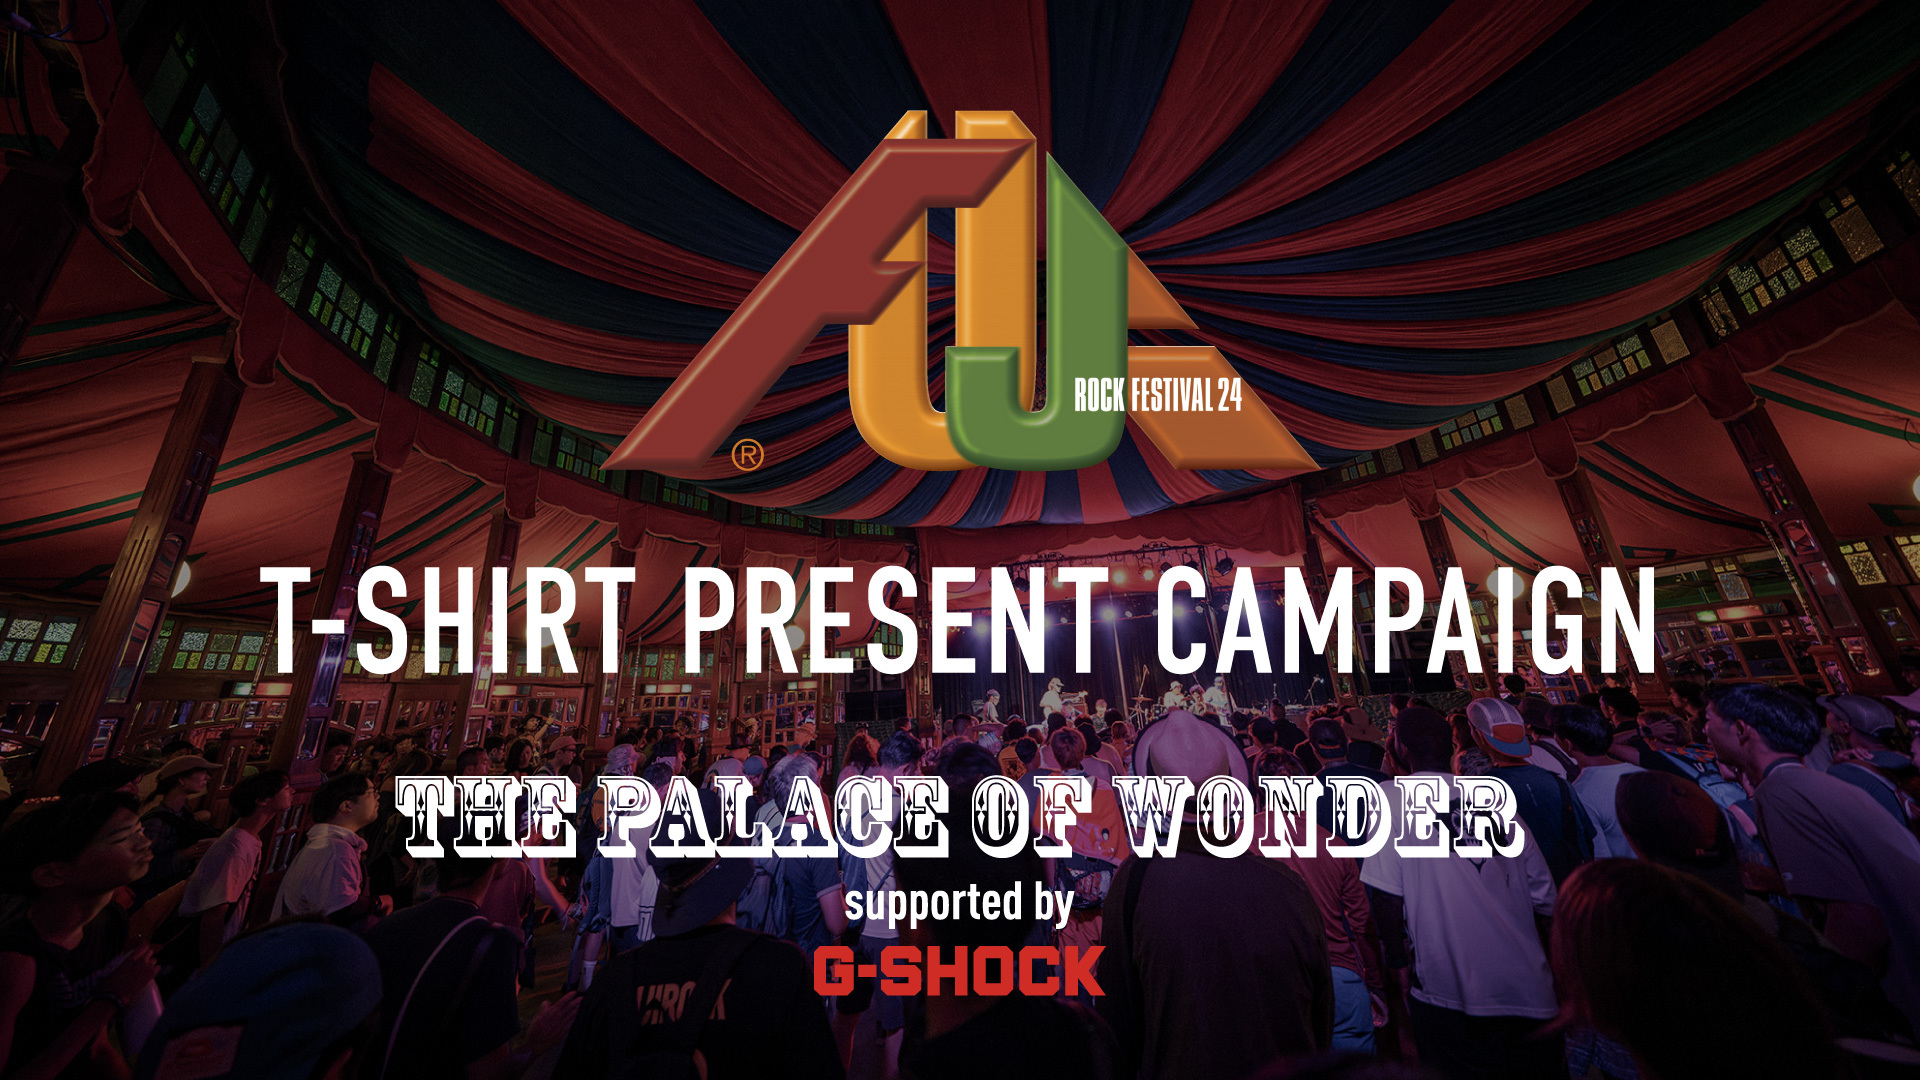 “G-SHOCK”がFUJI ROCK FESTIVALのオリジナルTシャツ
プレゼントキャンペーンを6/28より開催